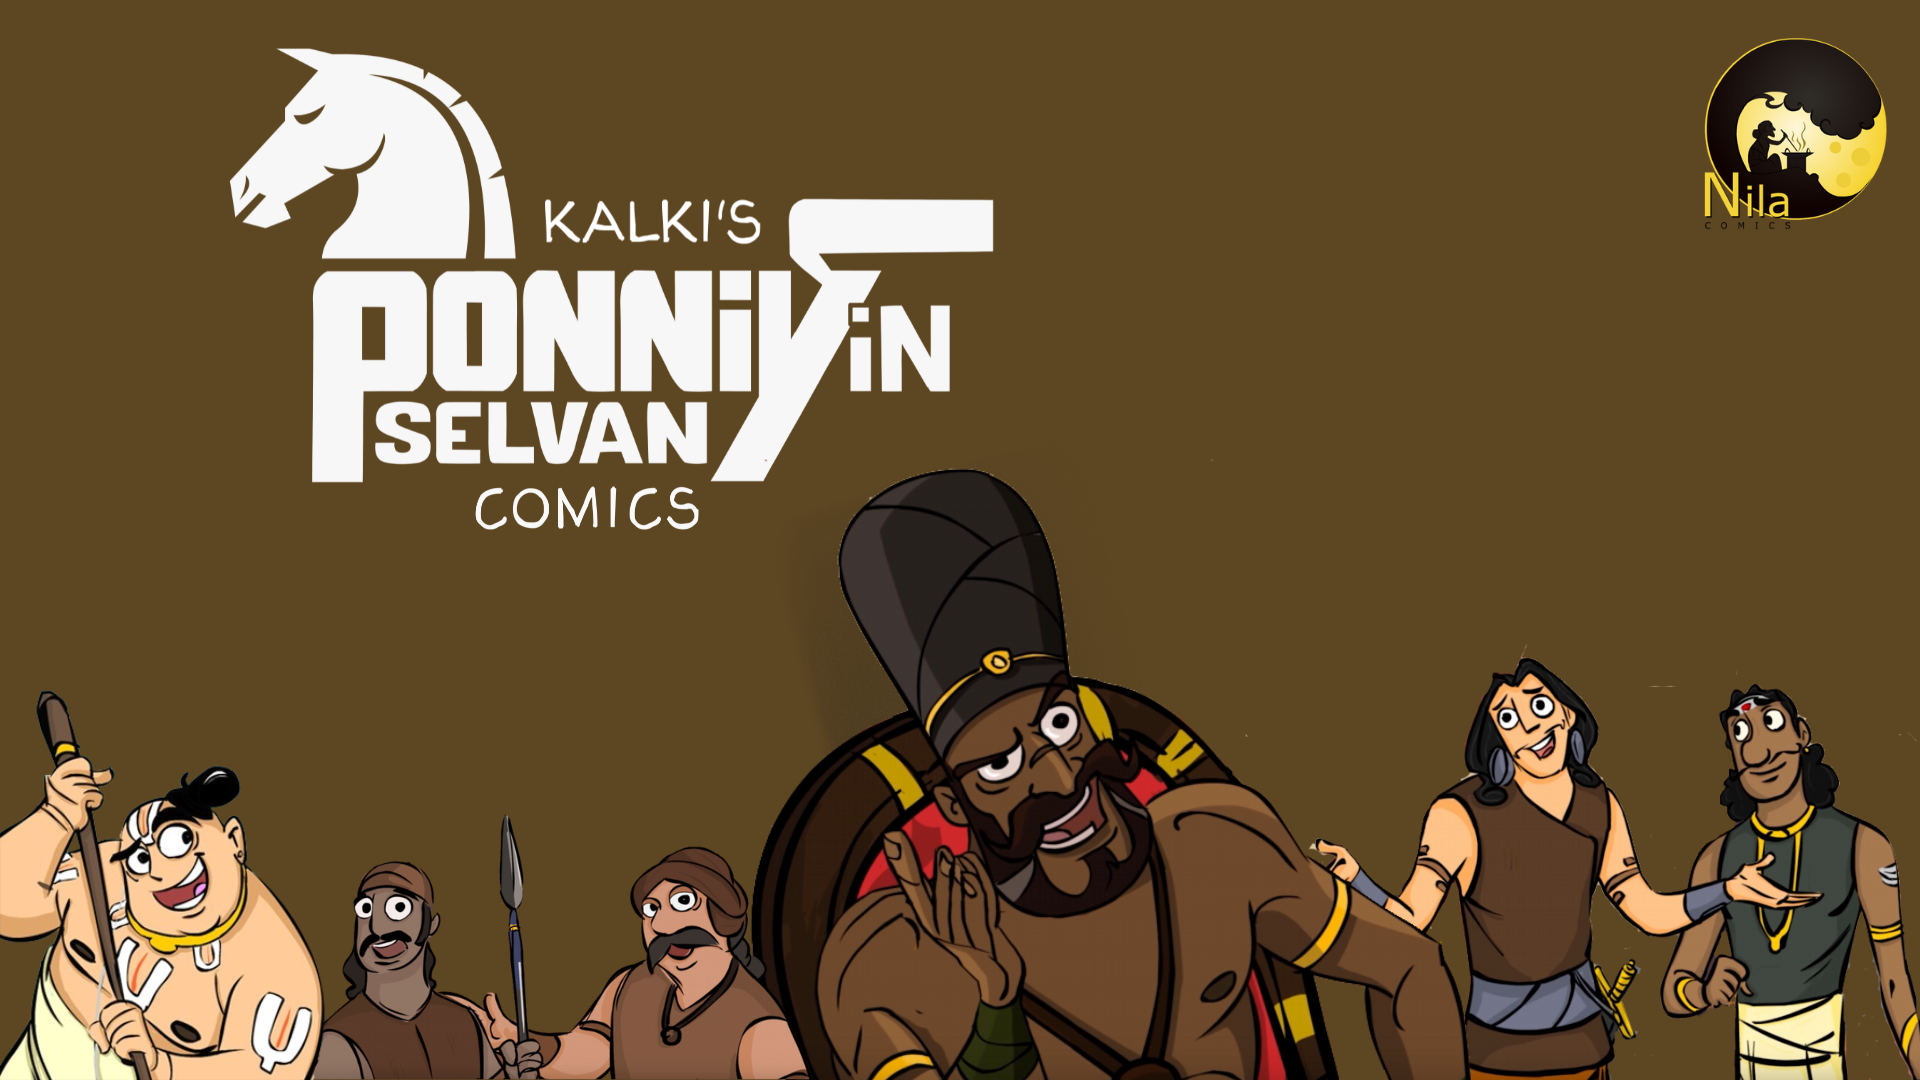 Ponniyin Selvan Nila Comics characters